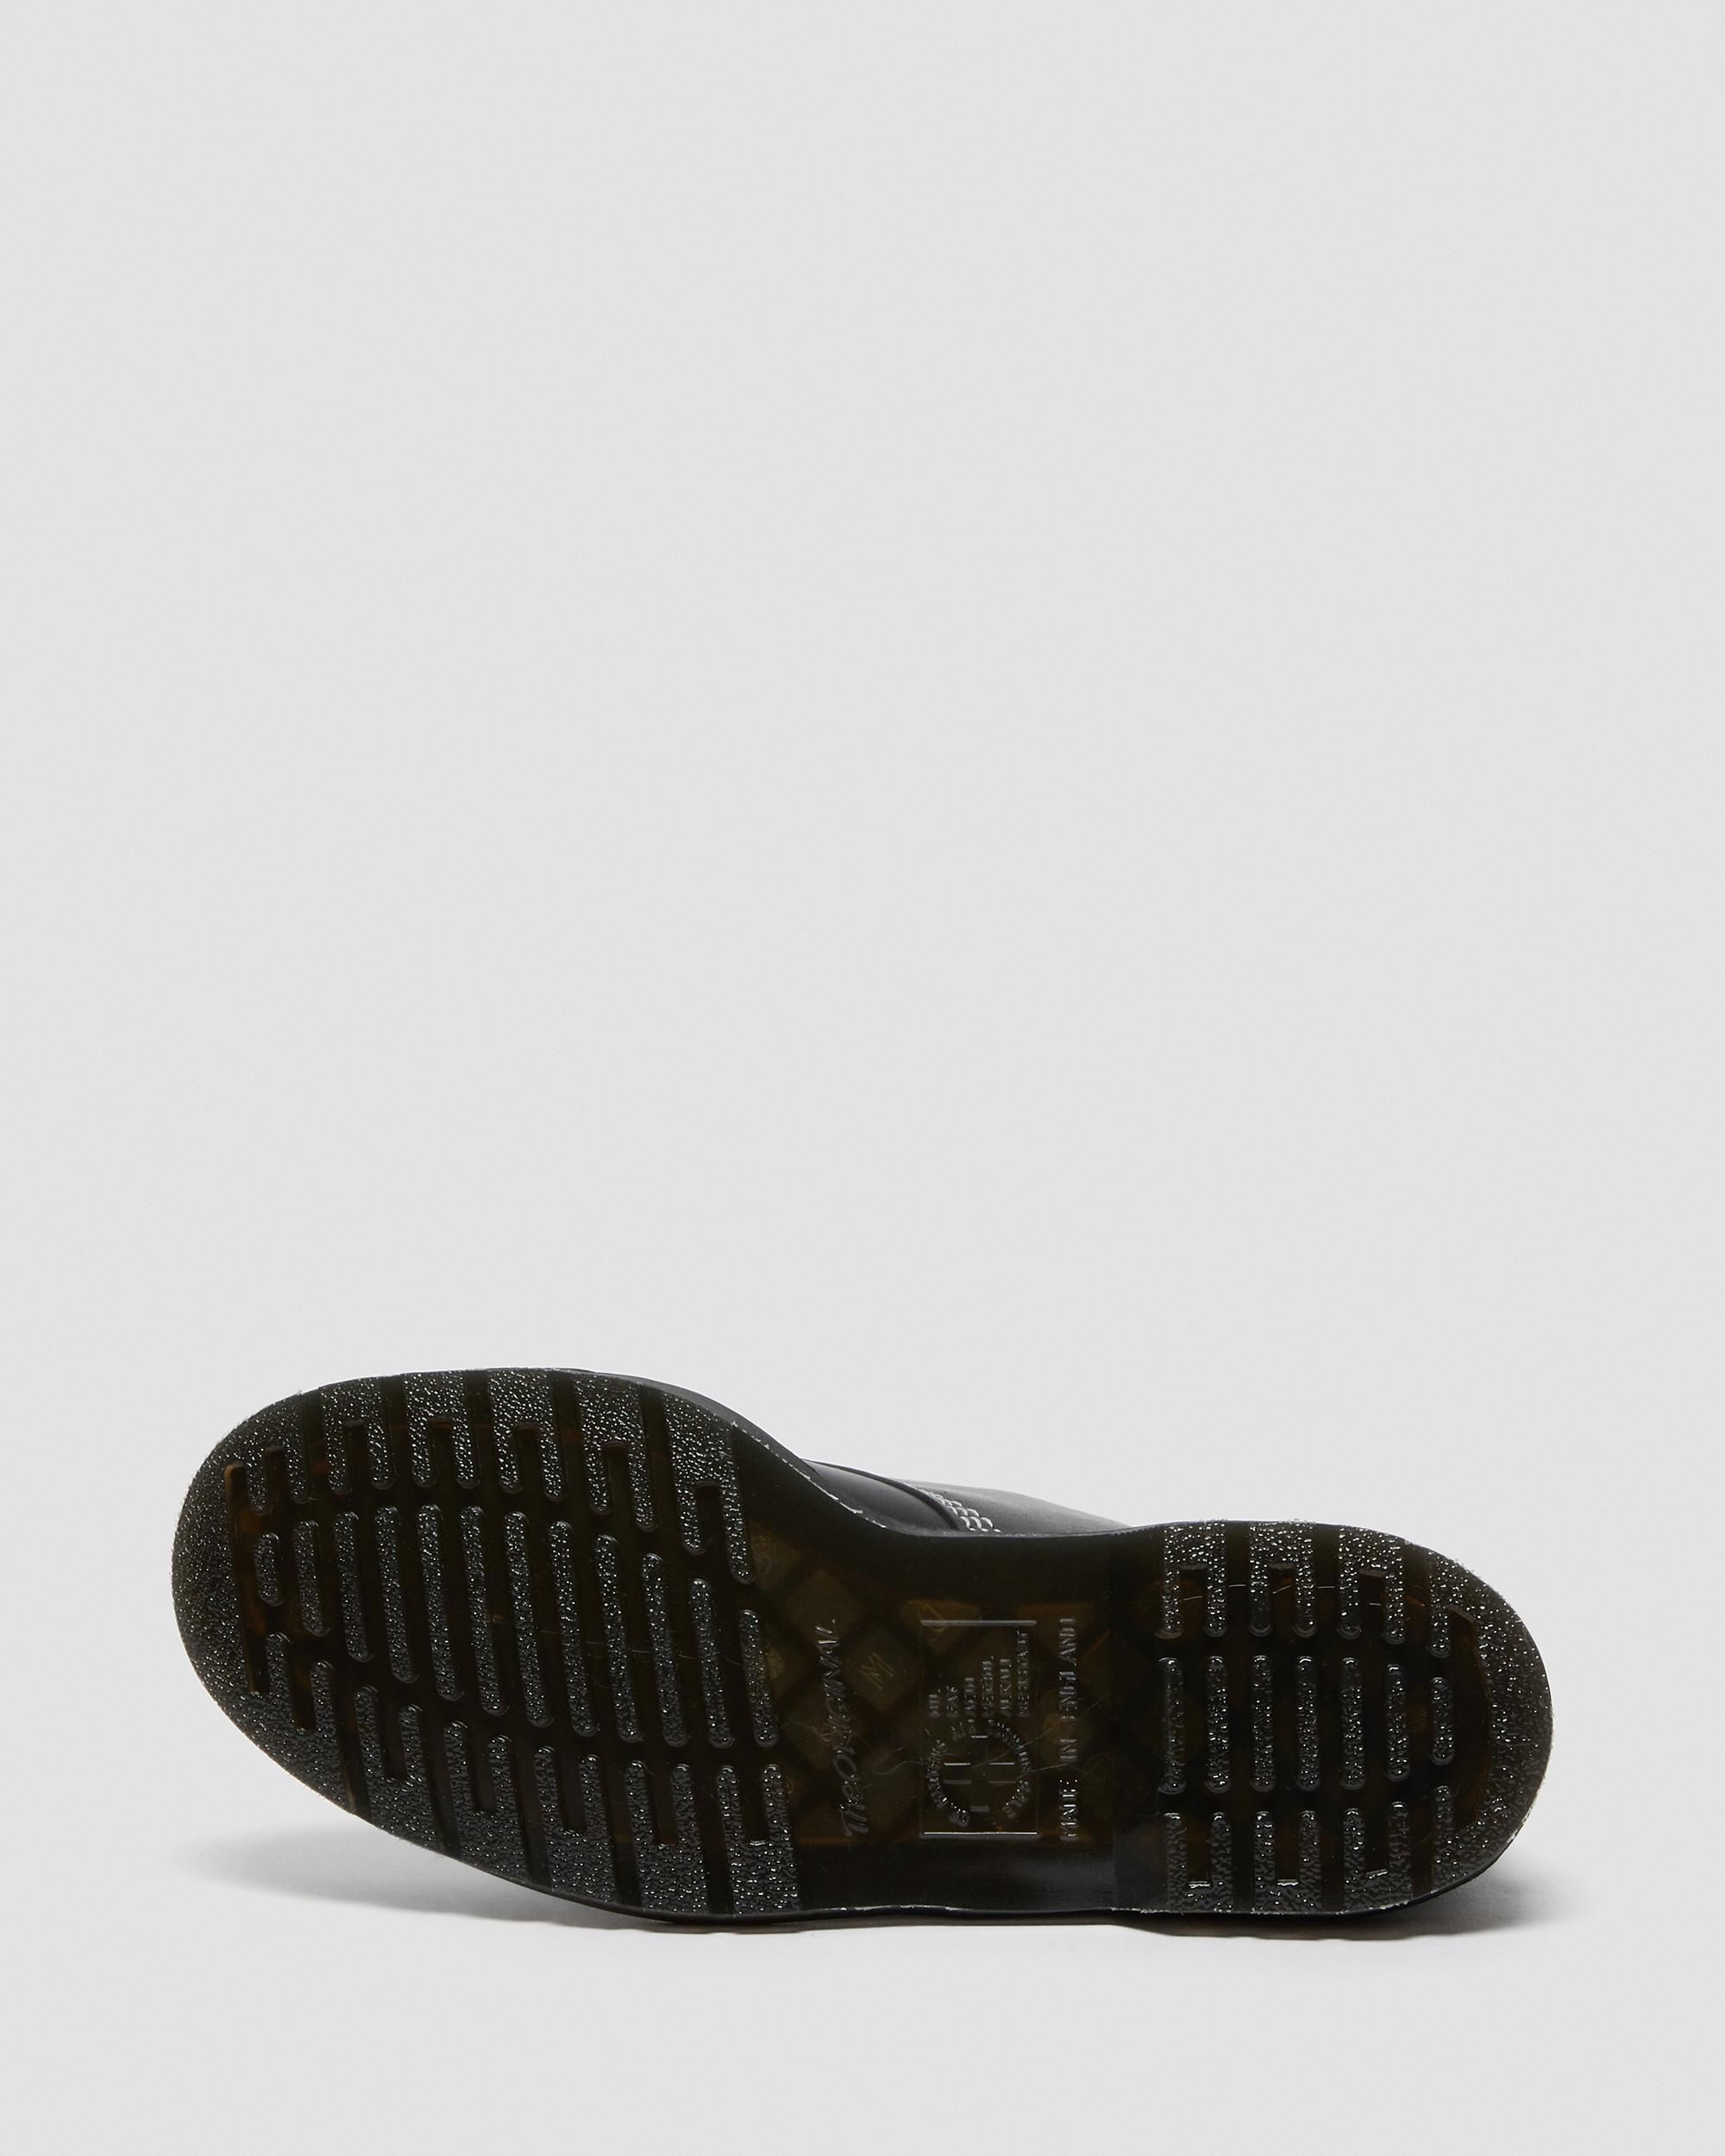 1460 Black Cavalier Leather Boots | Dr. Martens UK